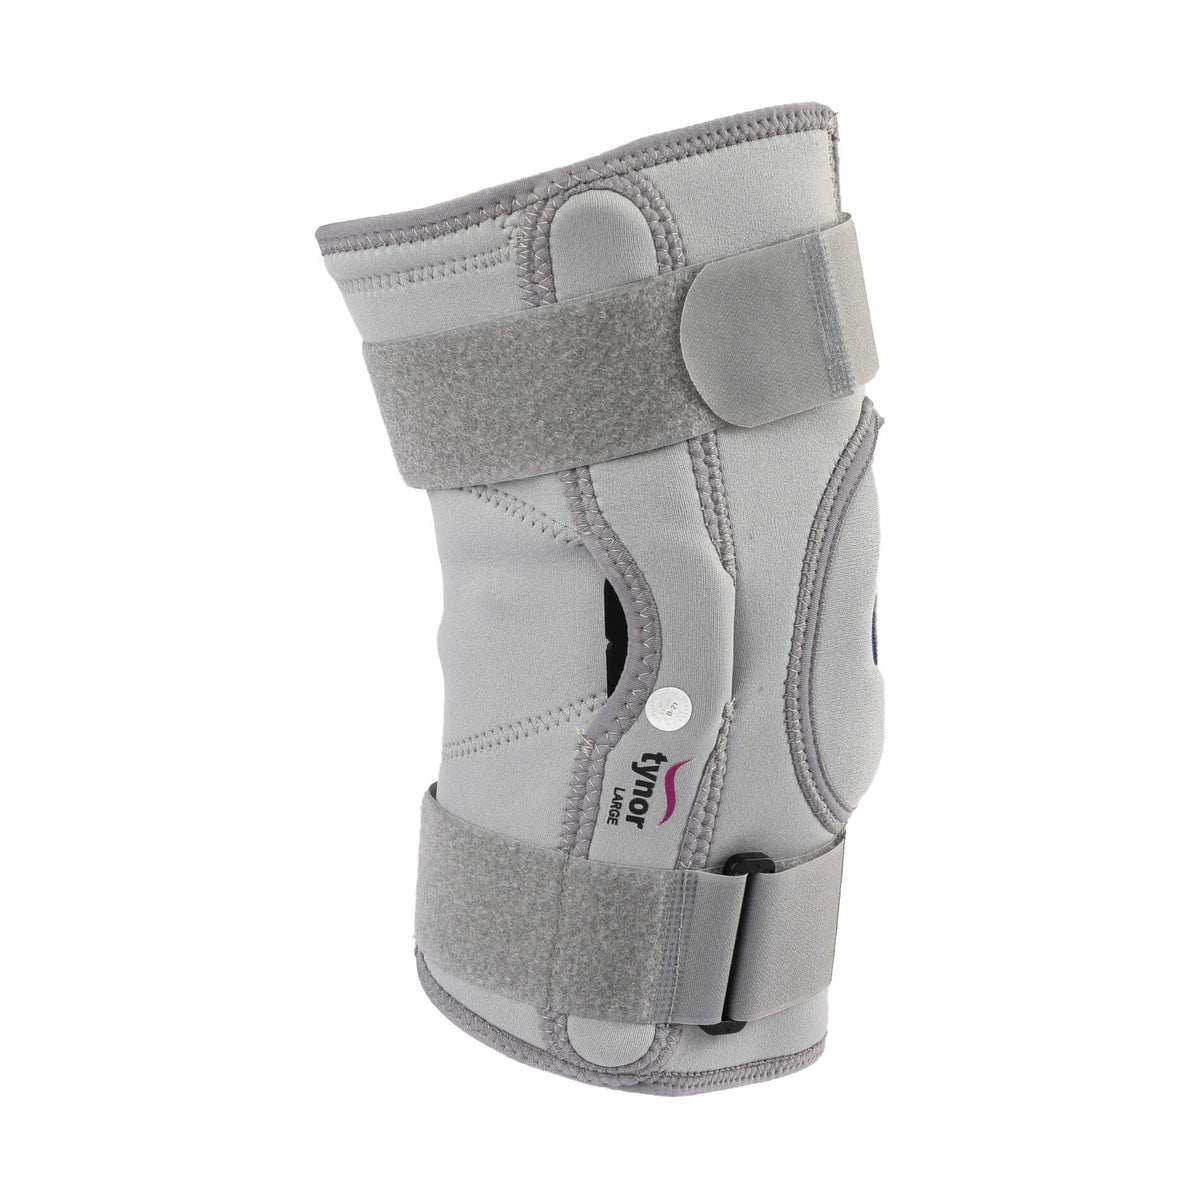 Neoprene Hinged knee support in grey color-5